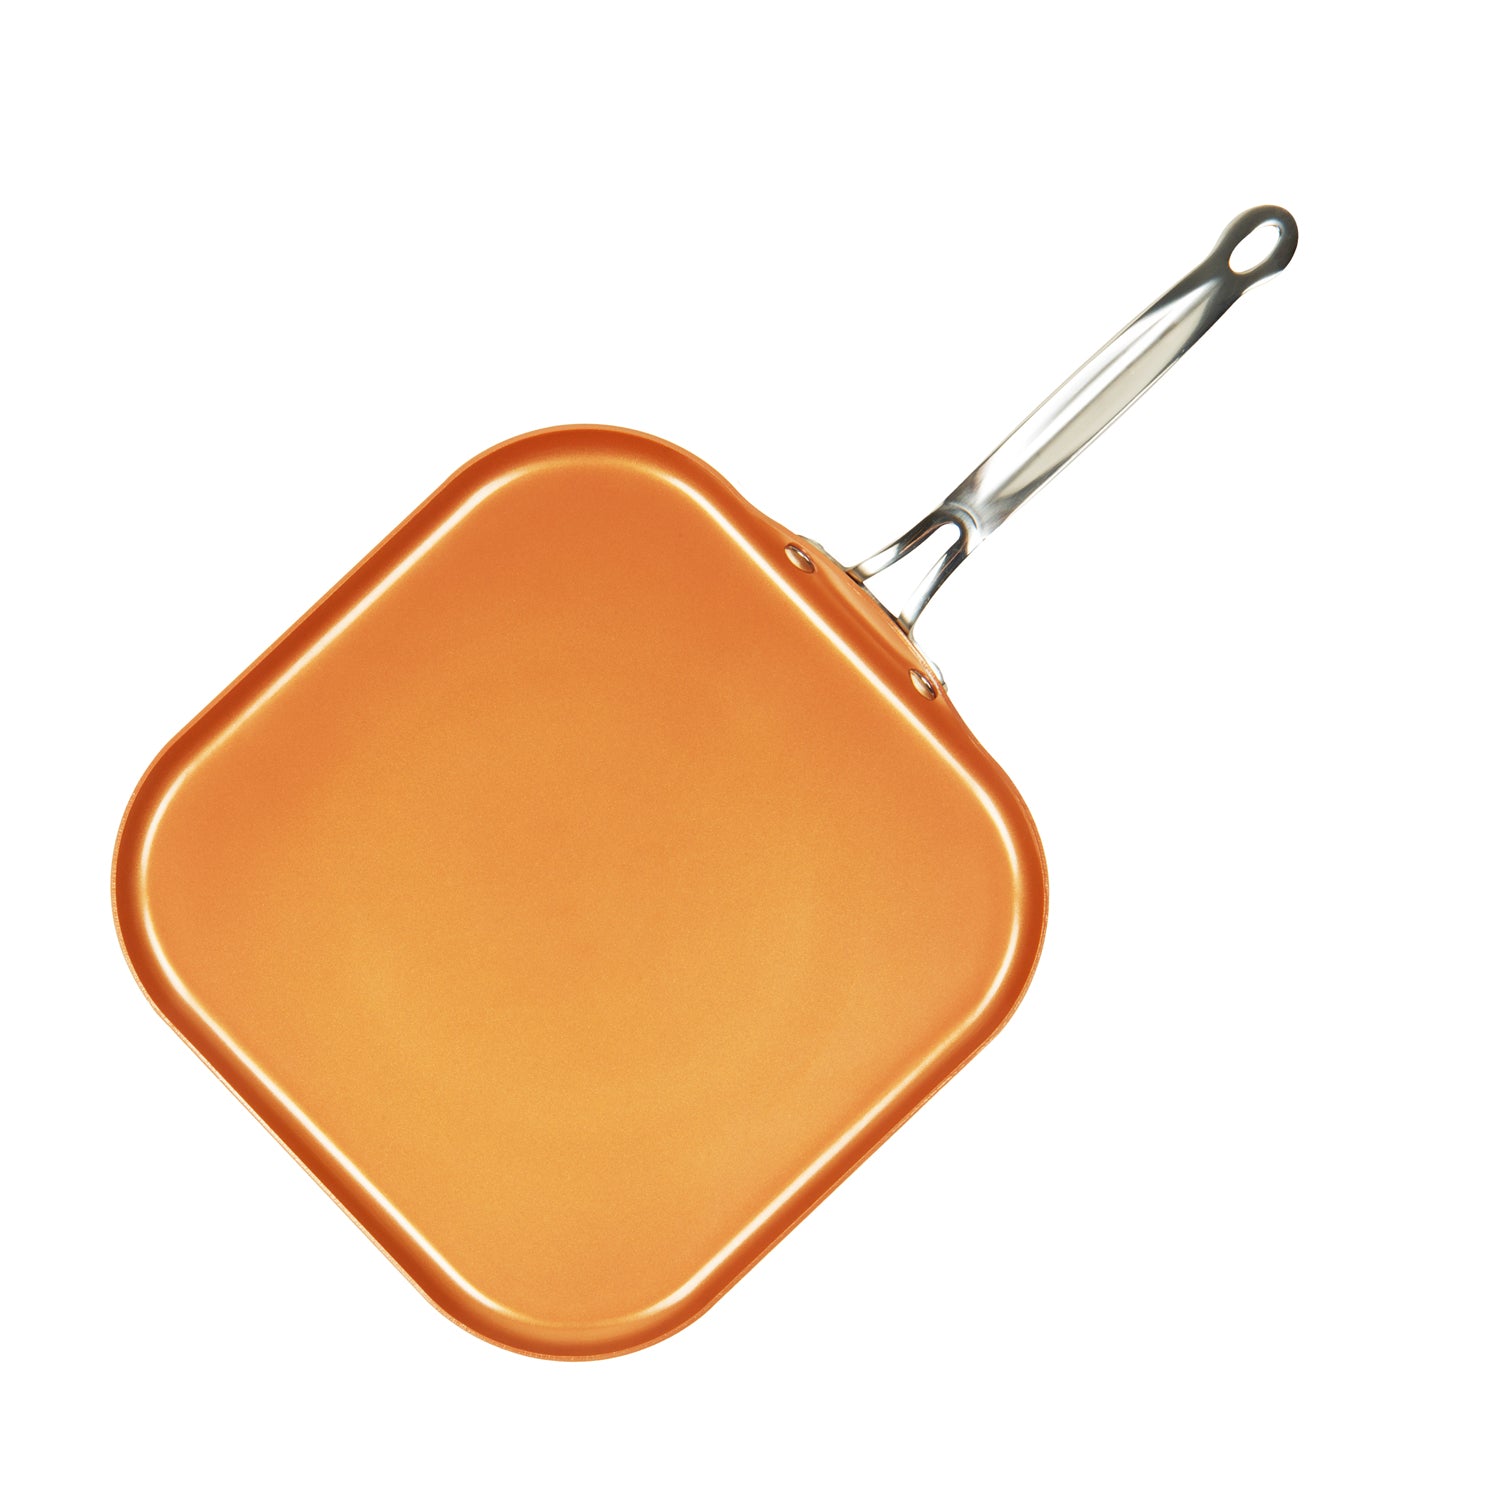 MasterPan Original Copper 11 Non-Stick Griddle Pan